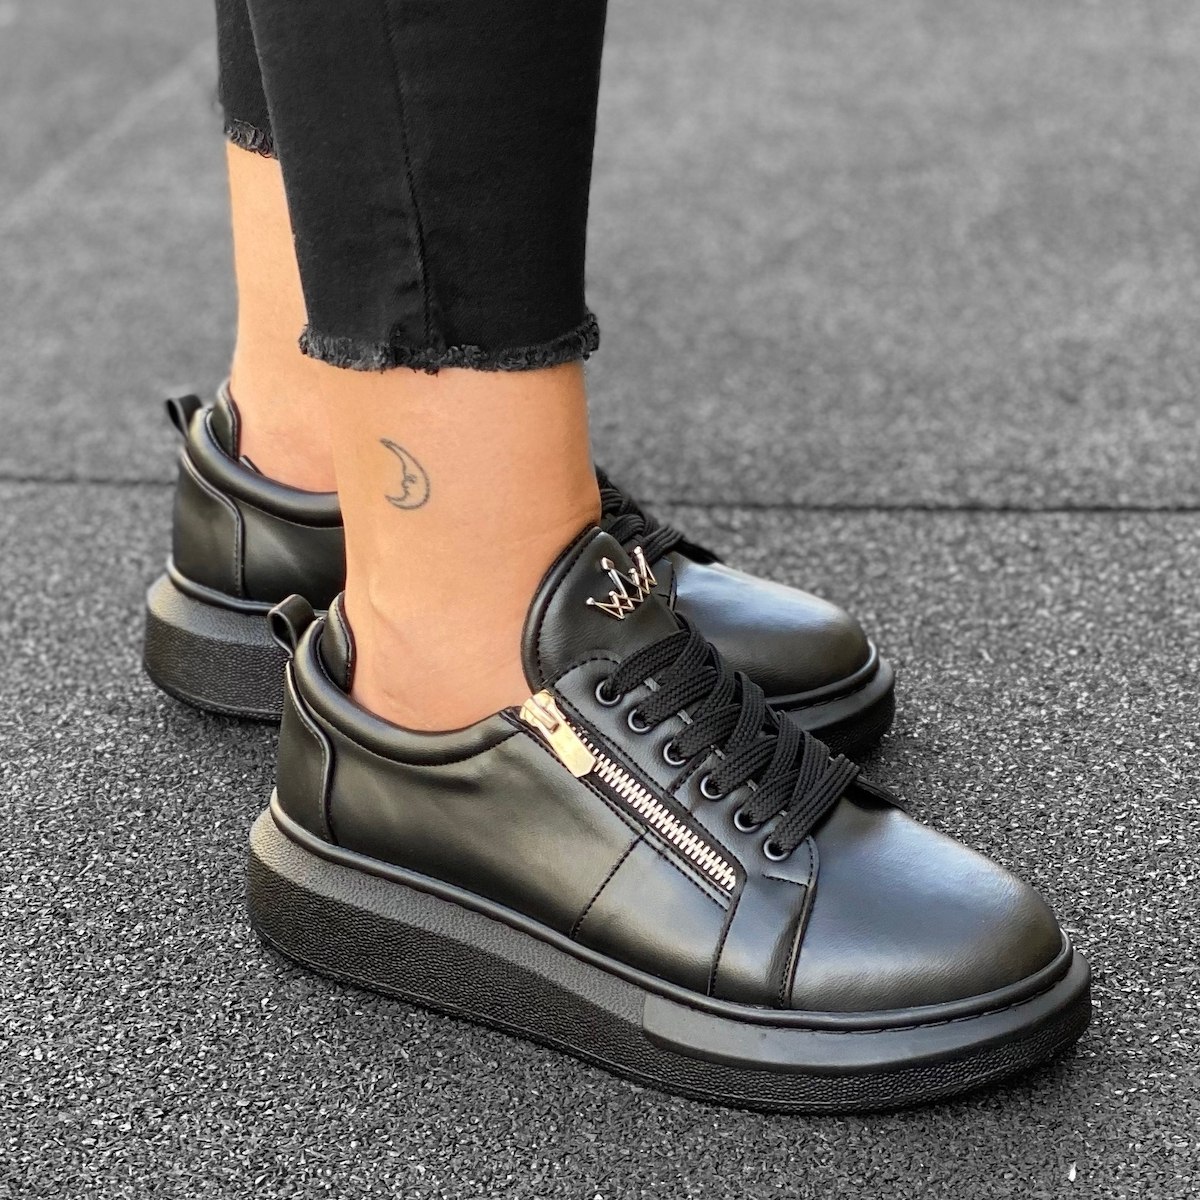 Woman Sole Zipped Style Sneakers in Black